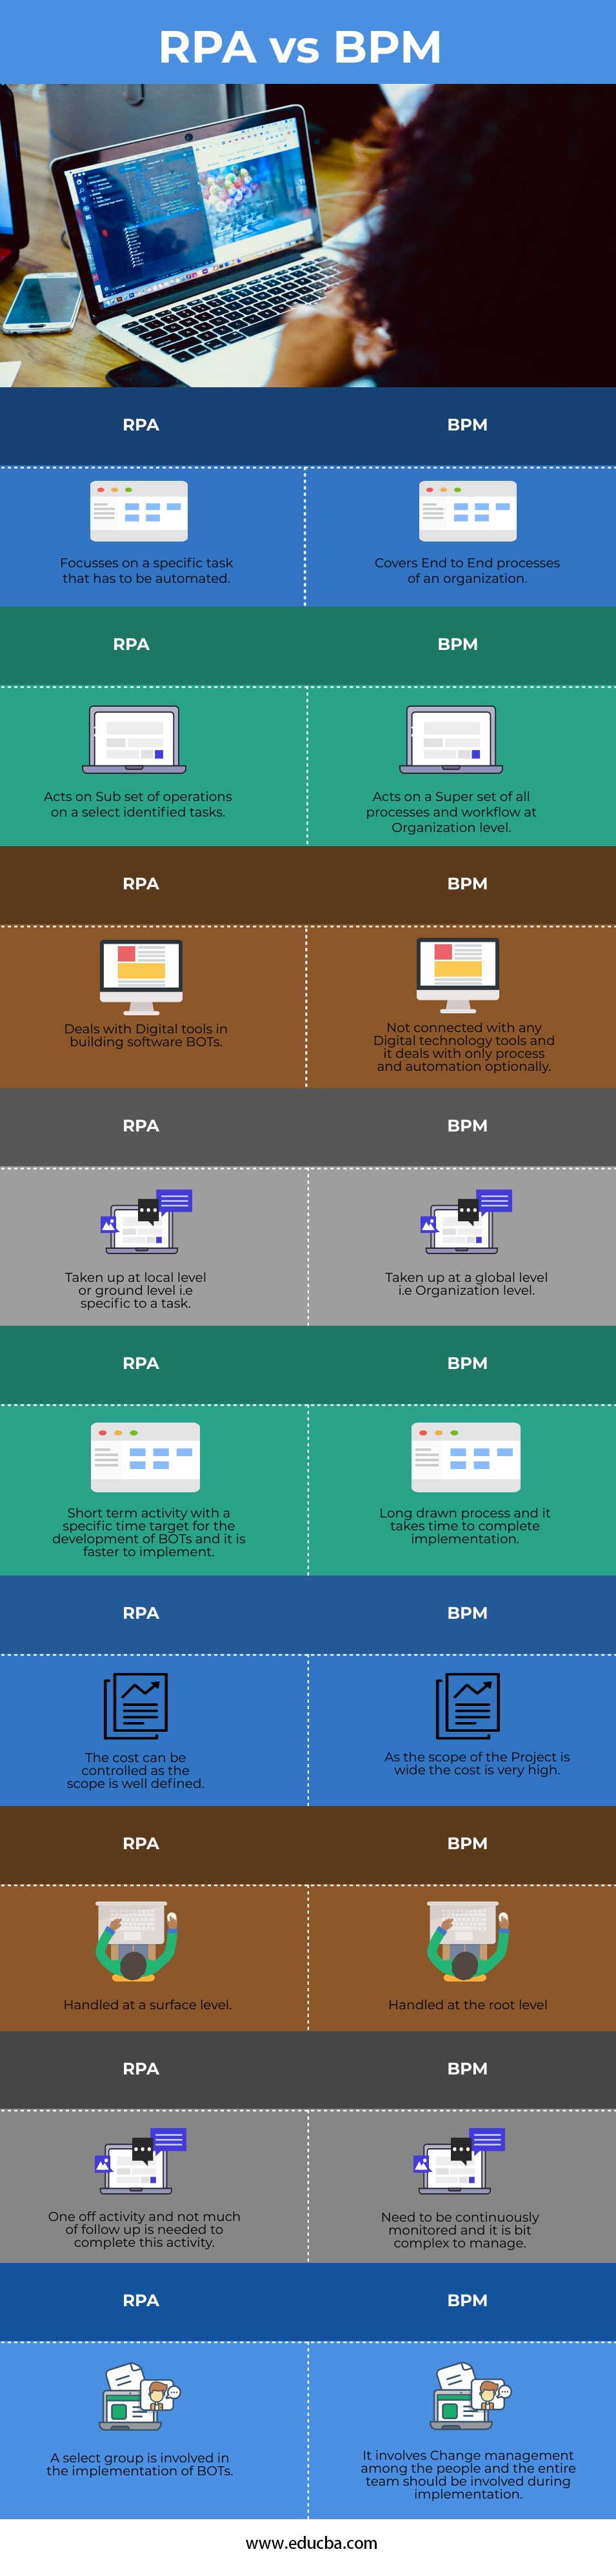 RPA vs BPM Info